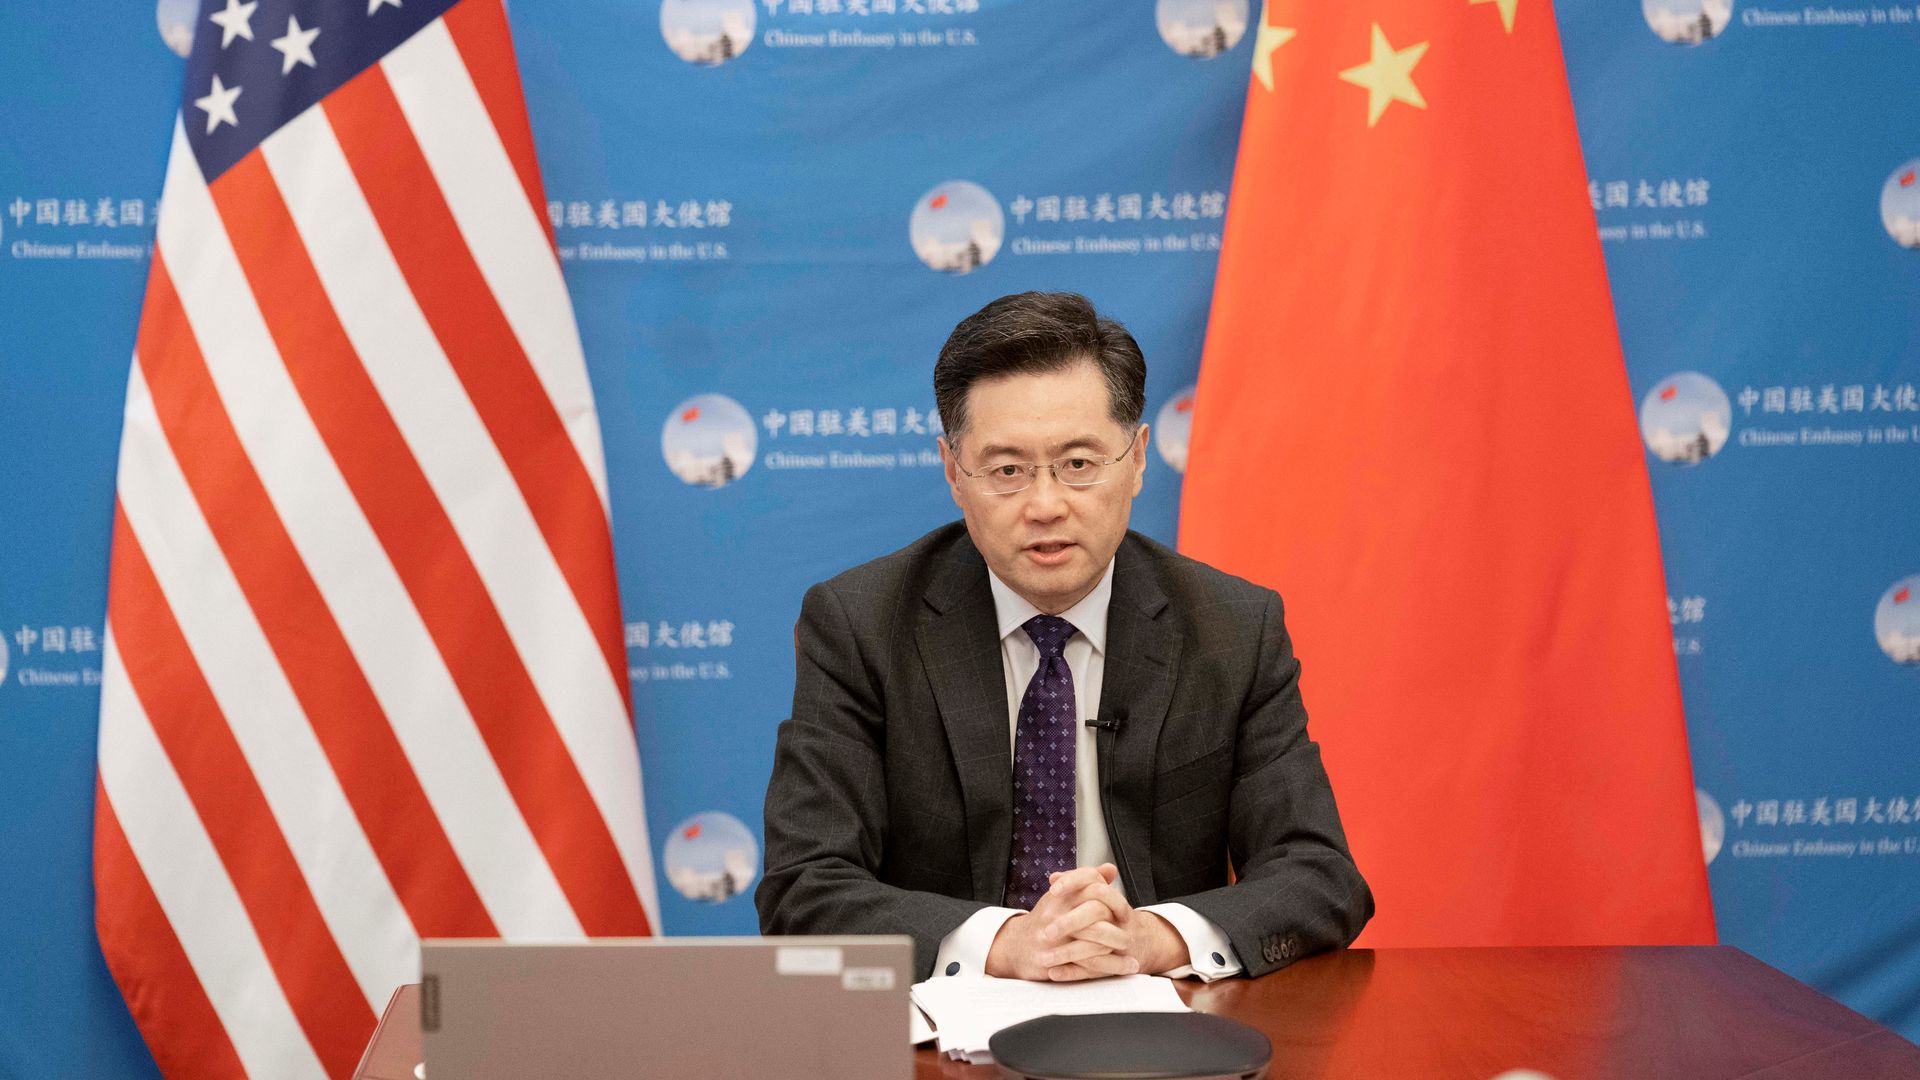 China's ambassador to the US